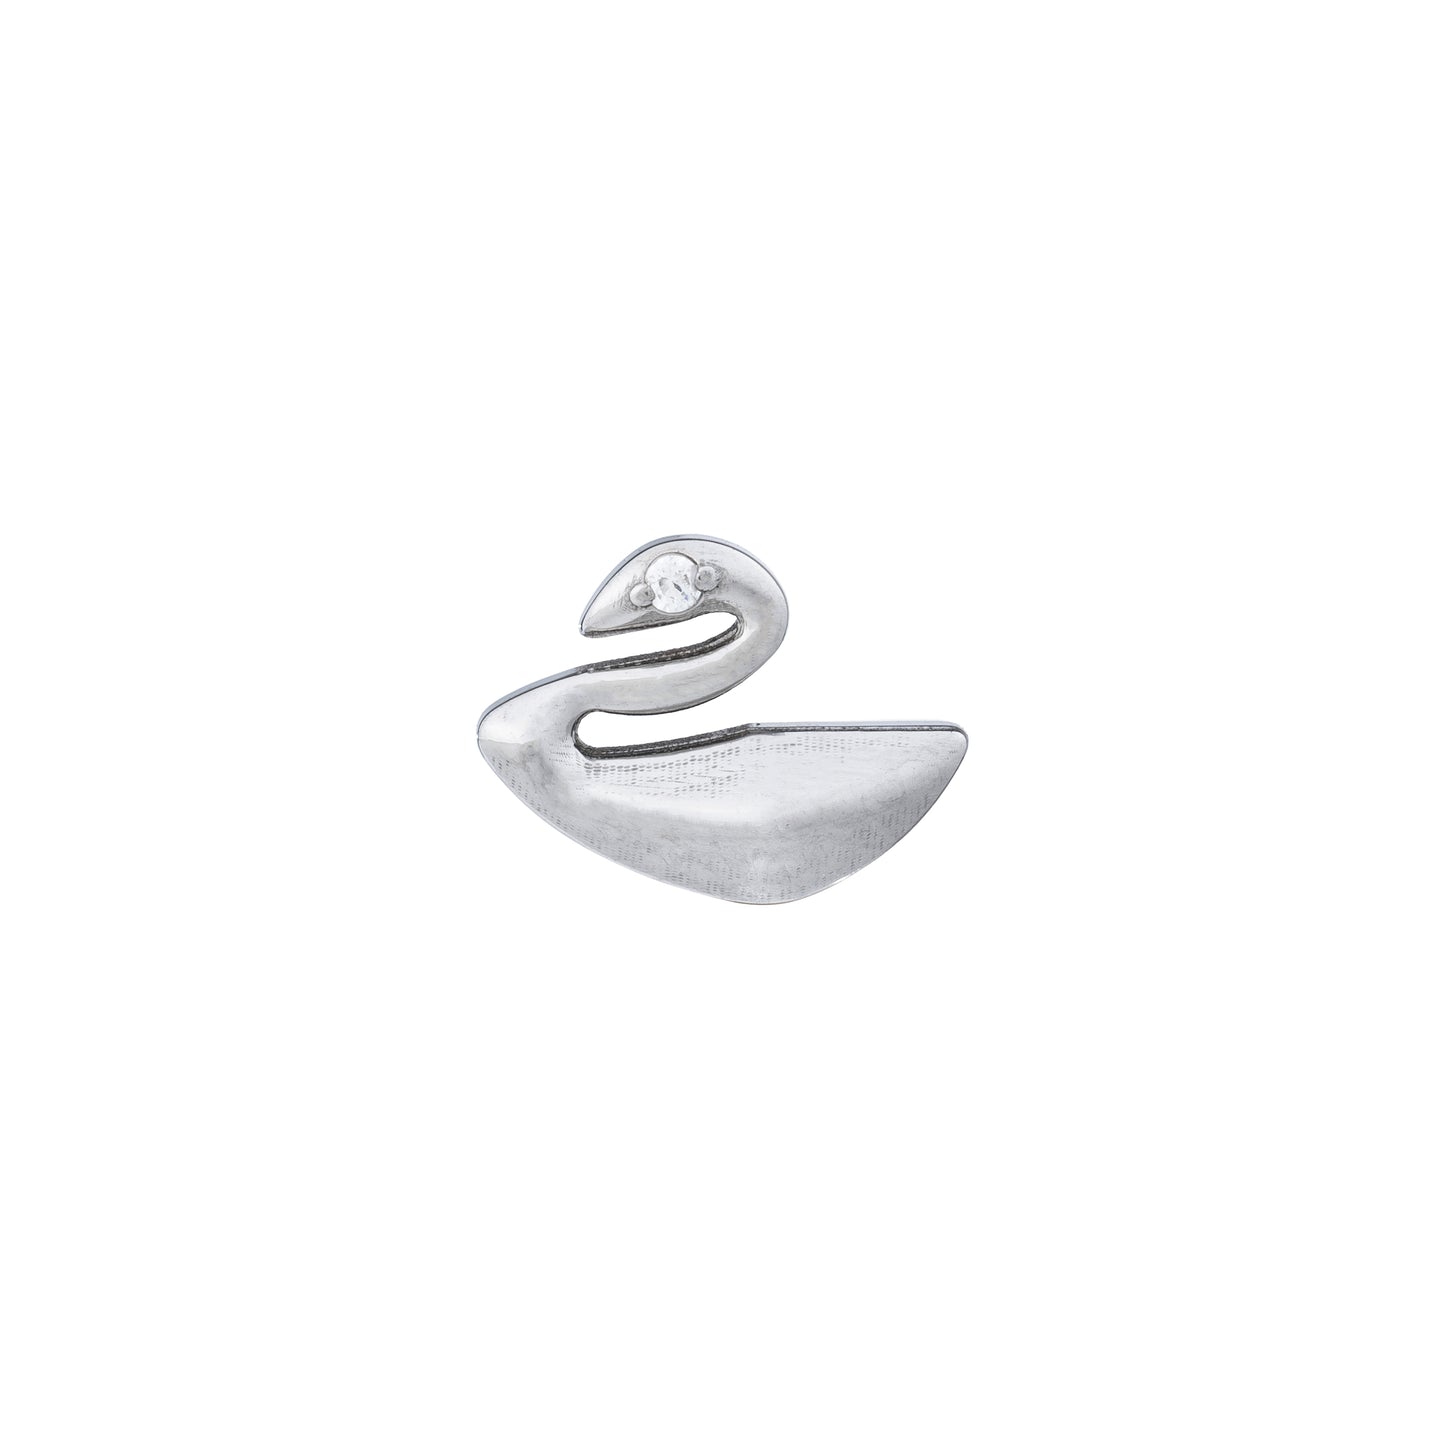 Titanium Swan Top With Single CZ Stone